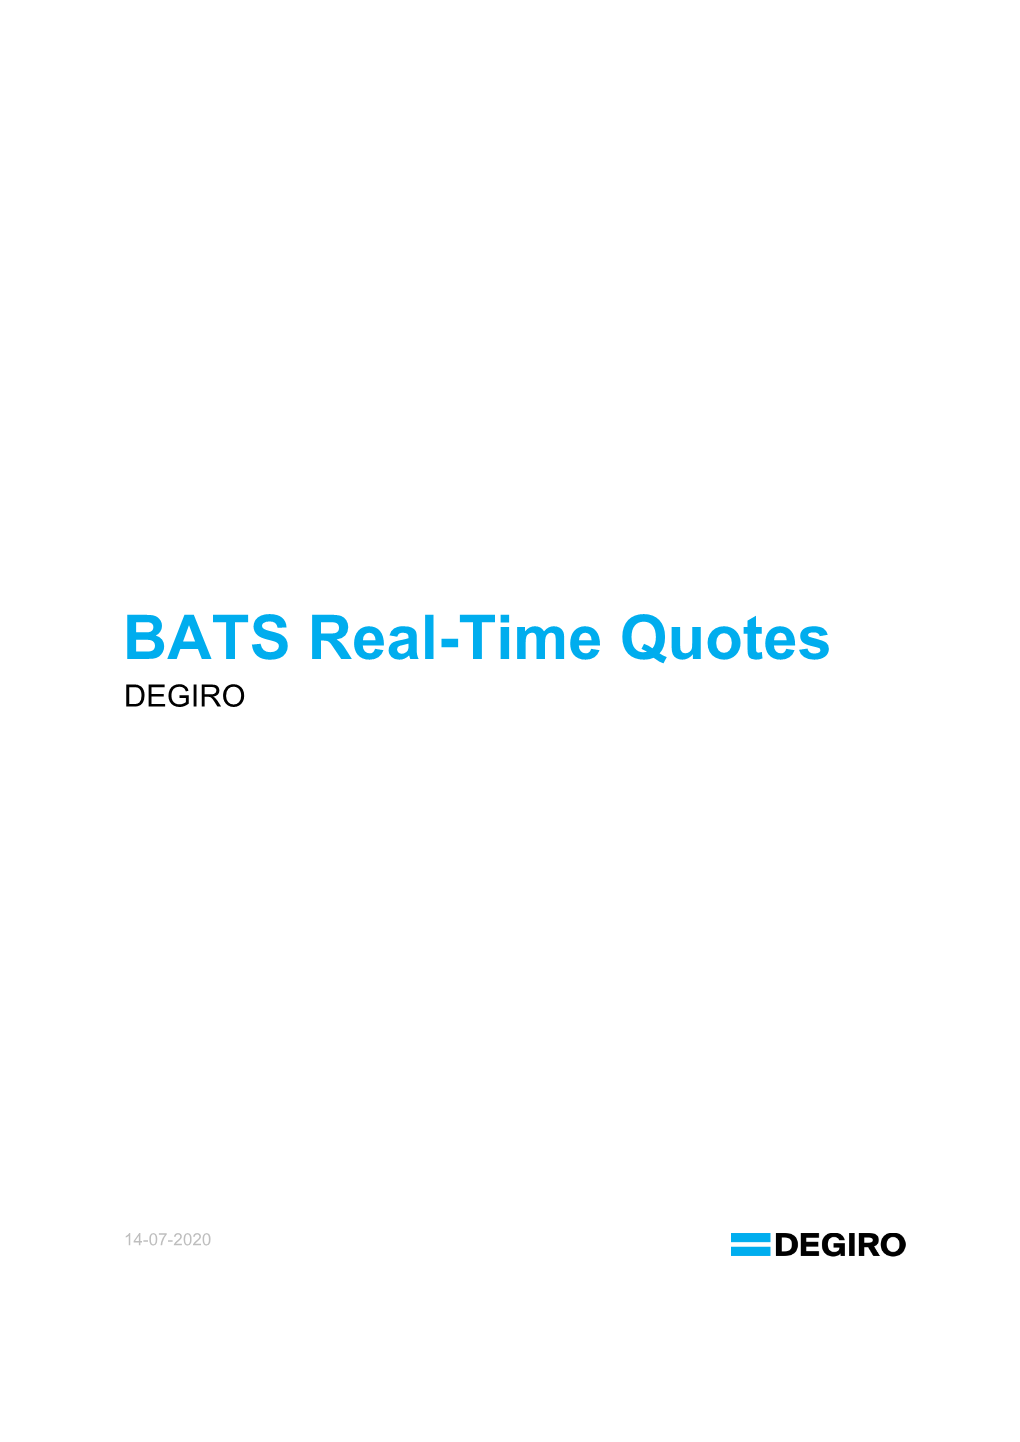 BATS Real-Time Quotes DEGIRO